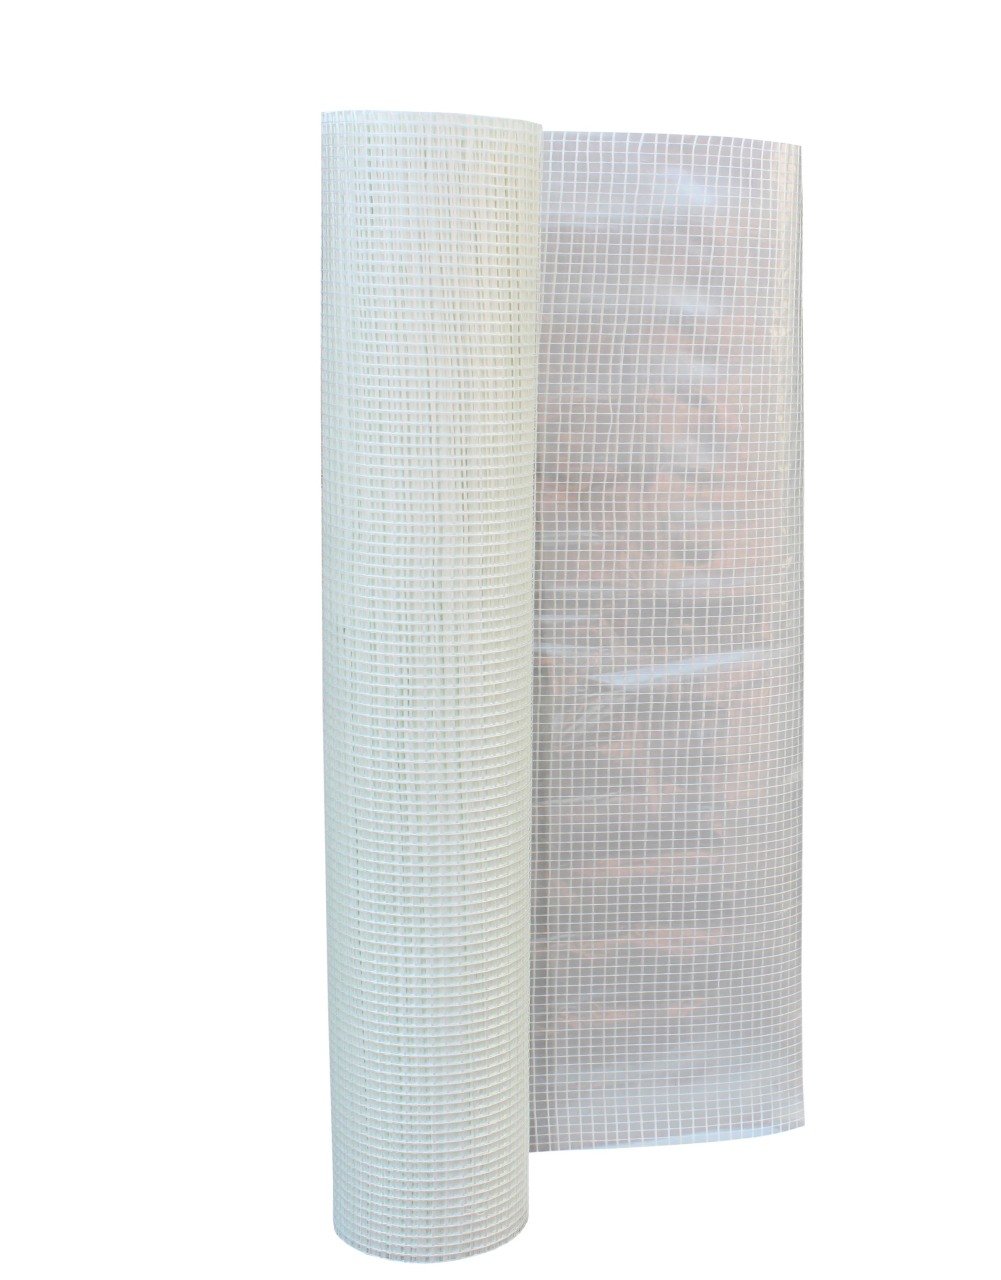 Structural reinforcement mesh 110 g 10 * 10 * 50 mm 1 m